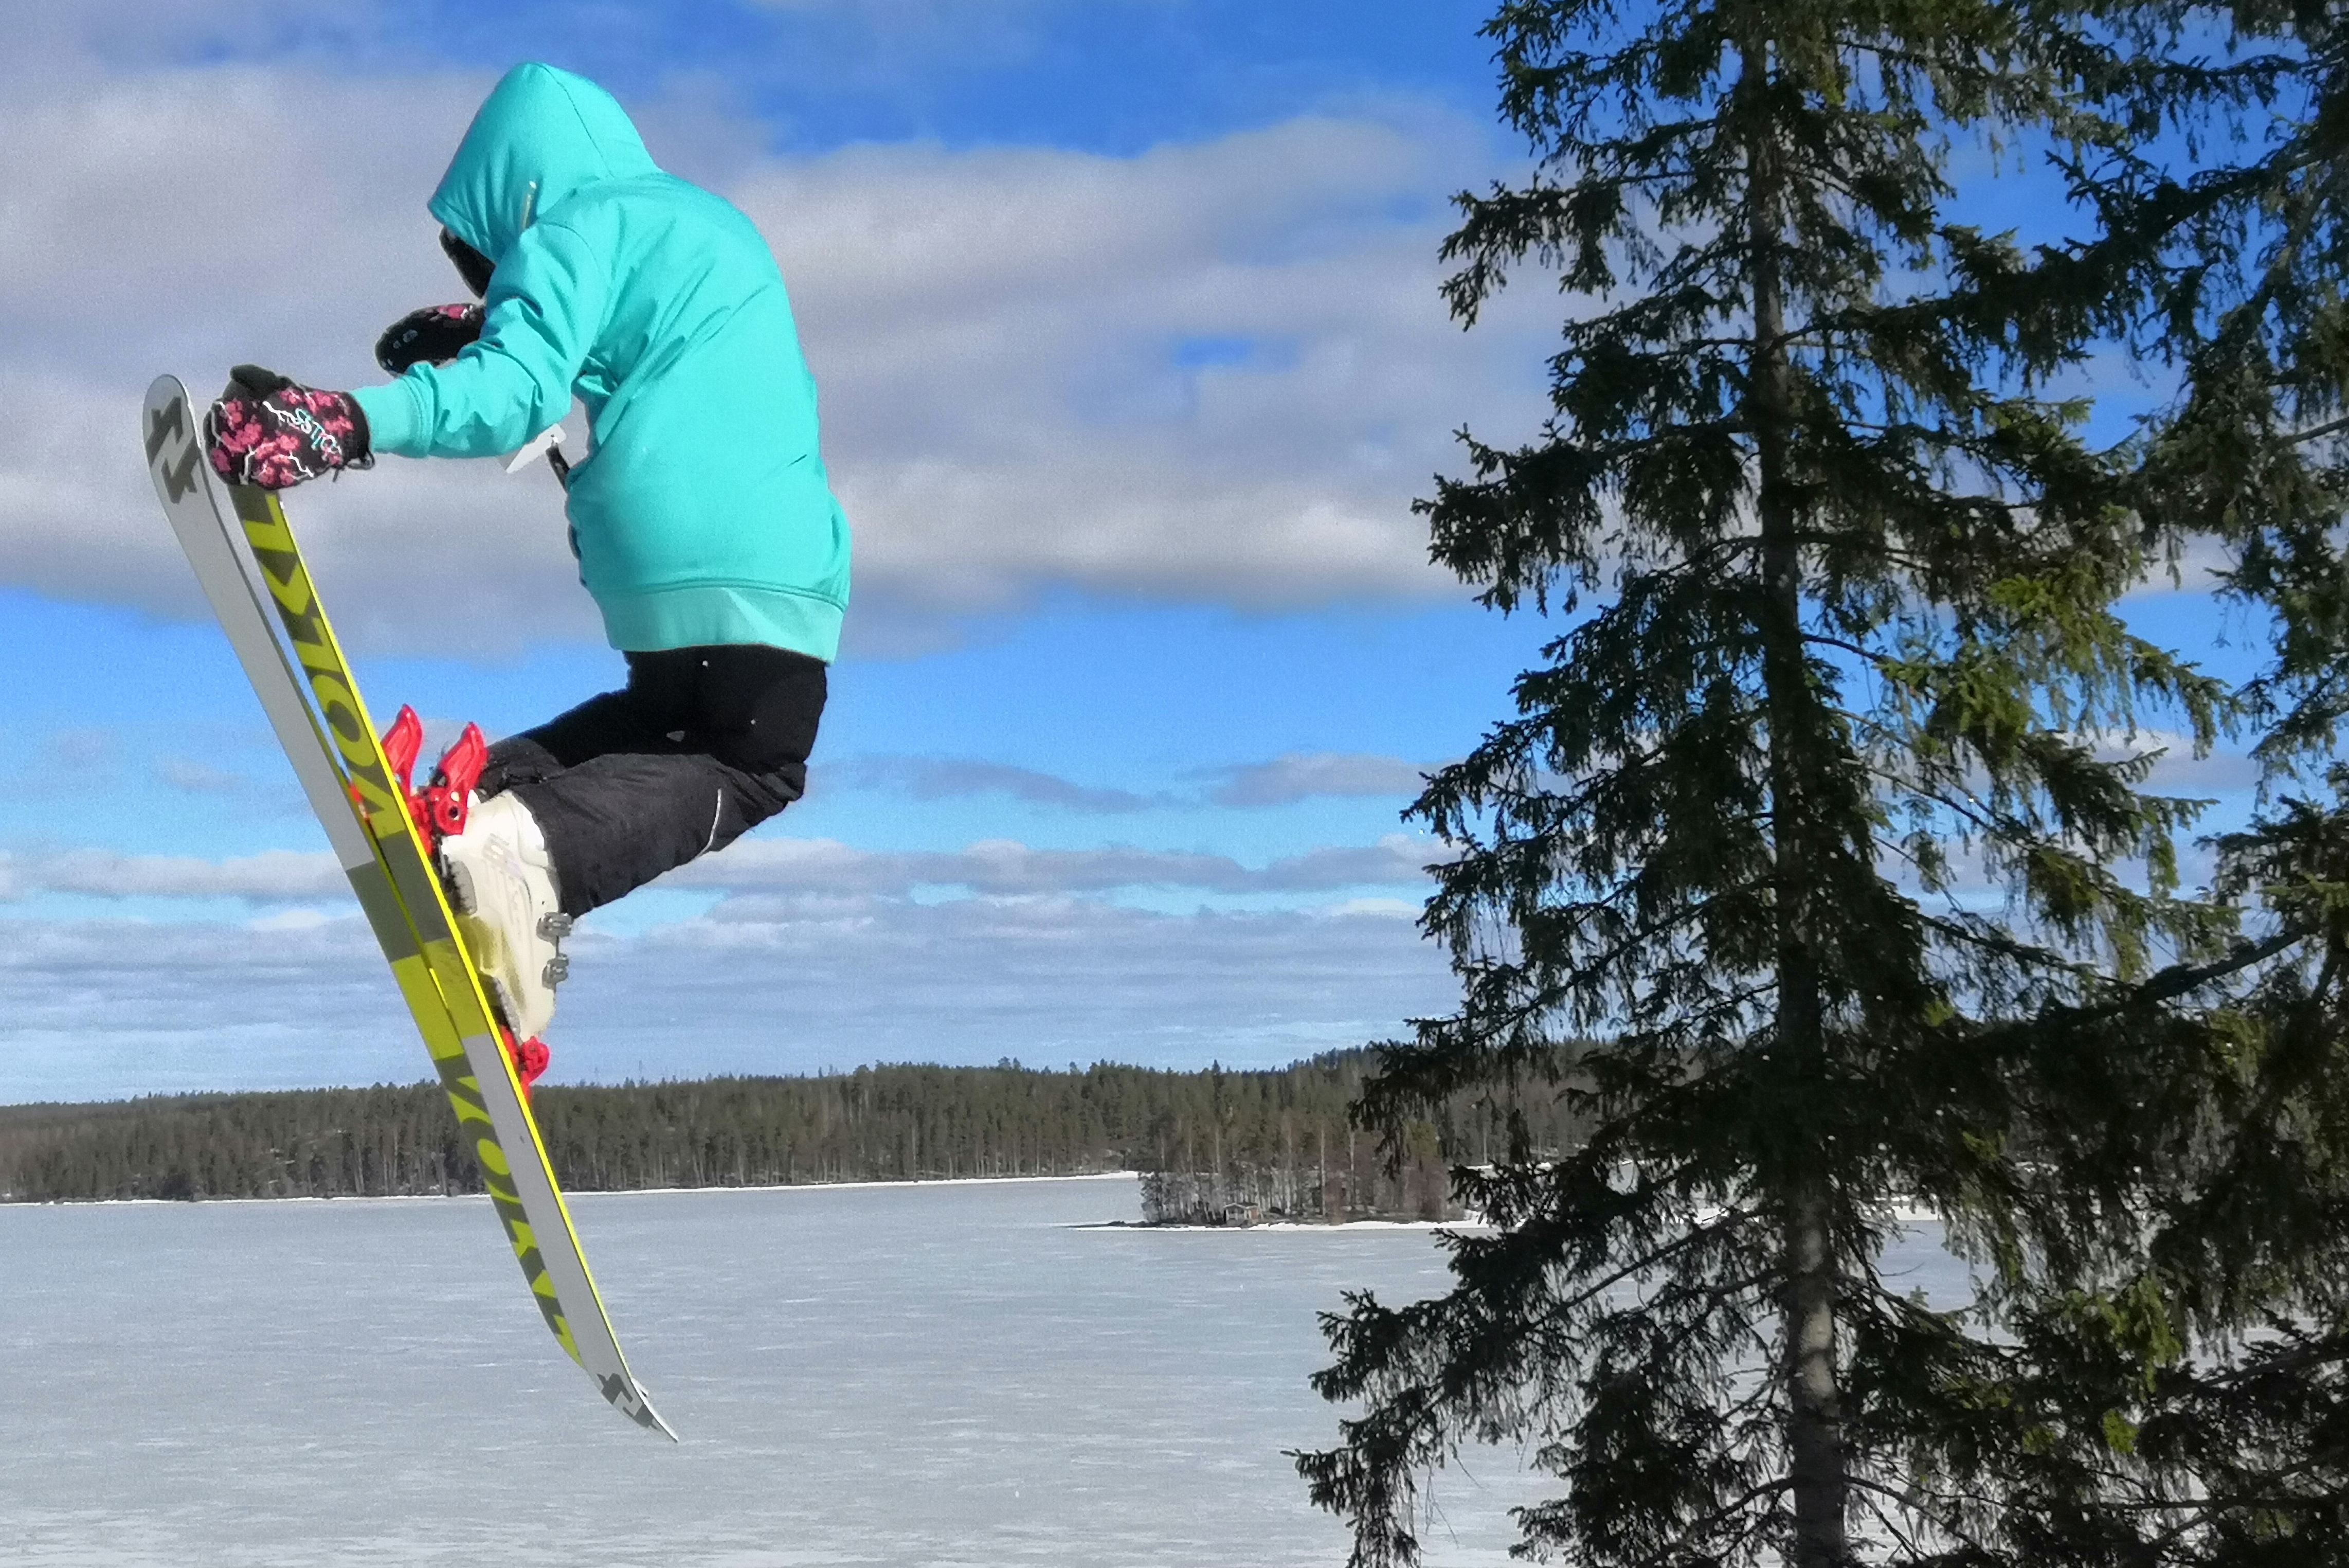 Skier jumps on the Freeski slopes